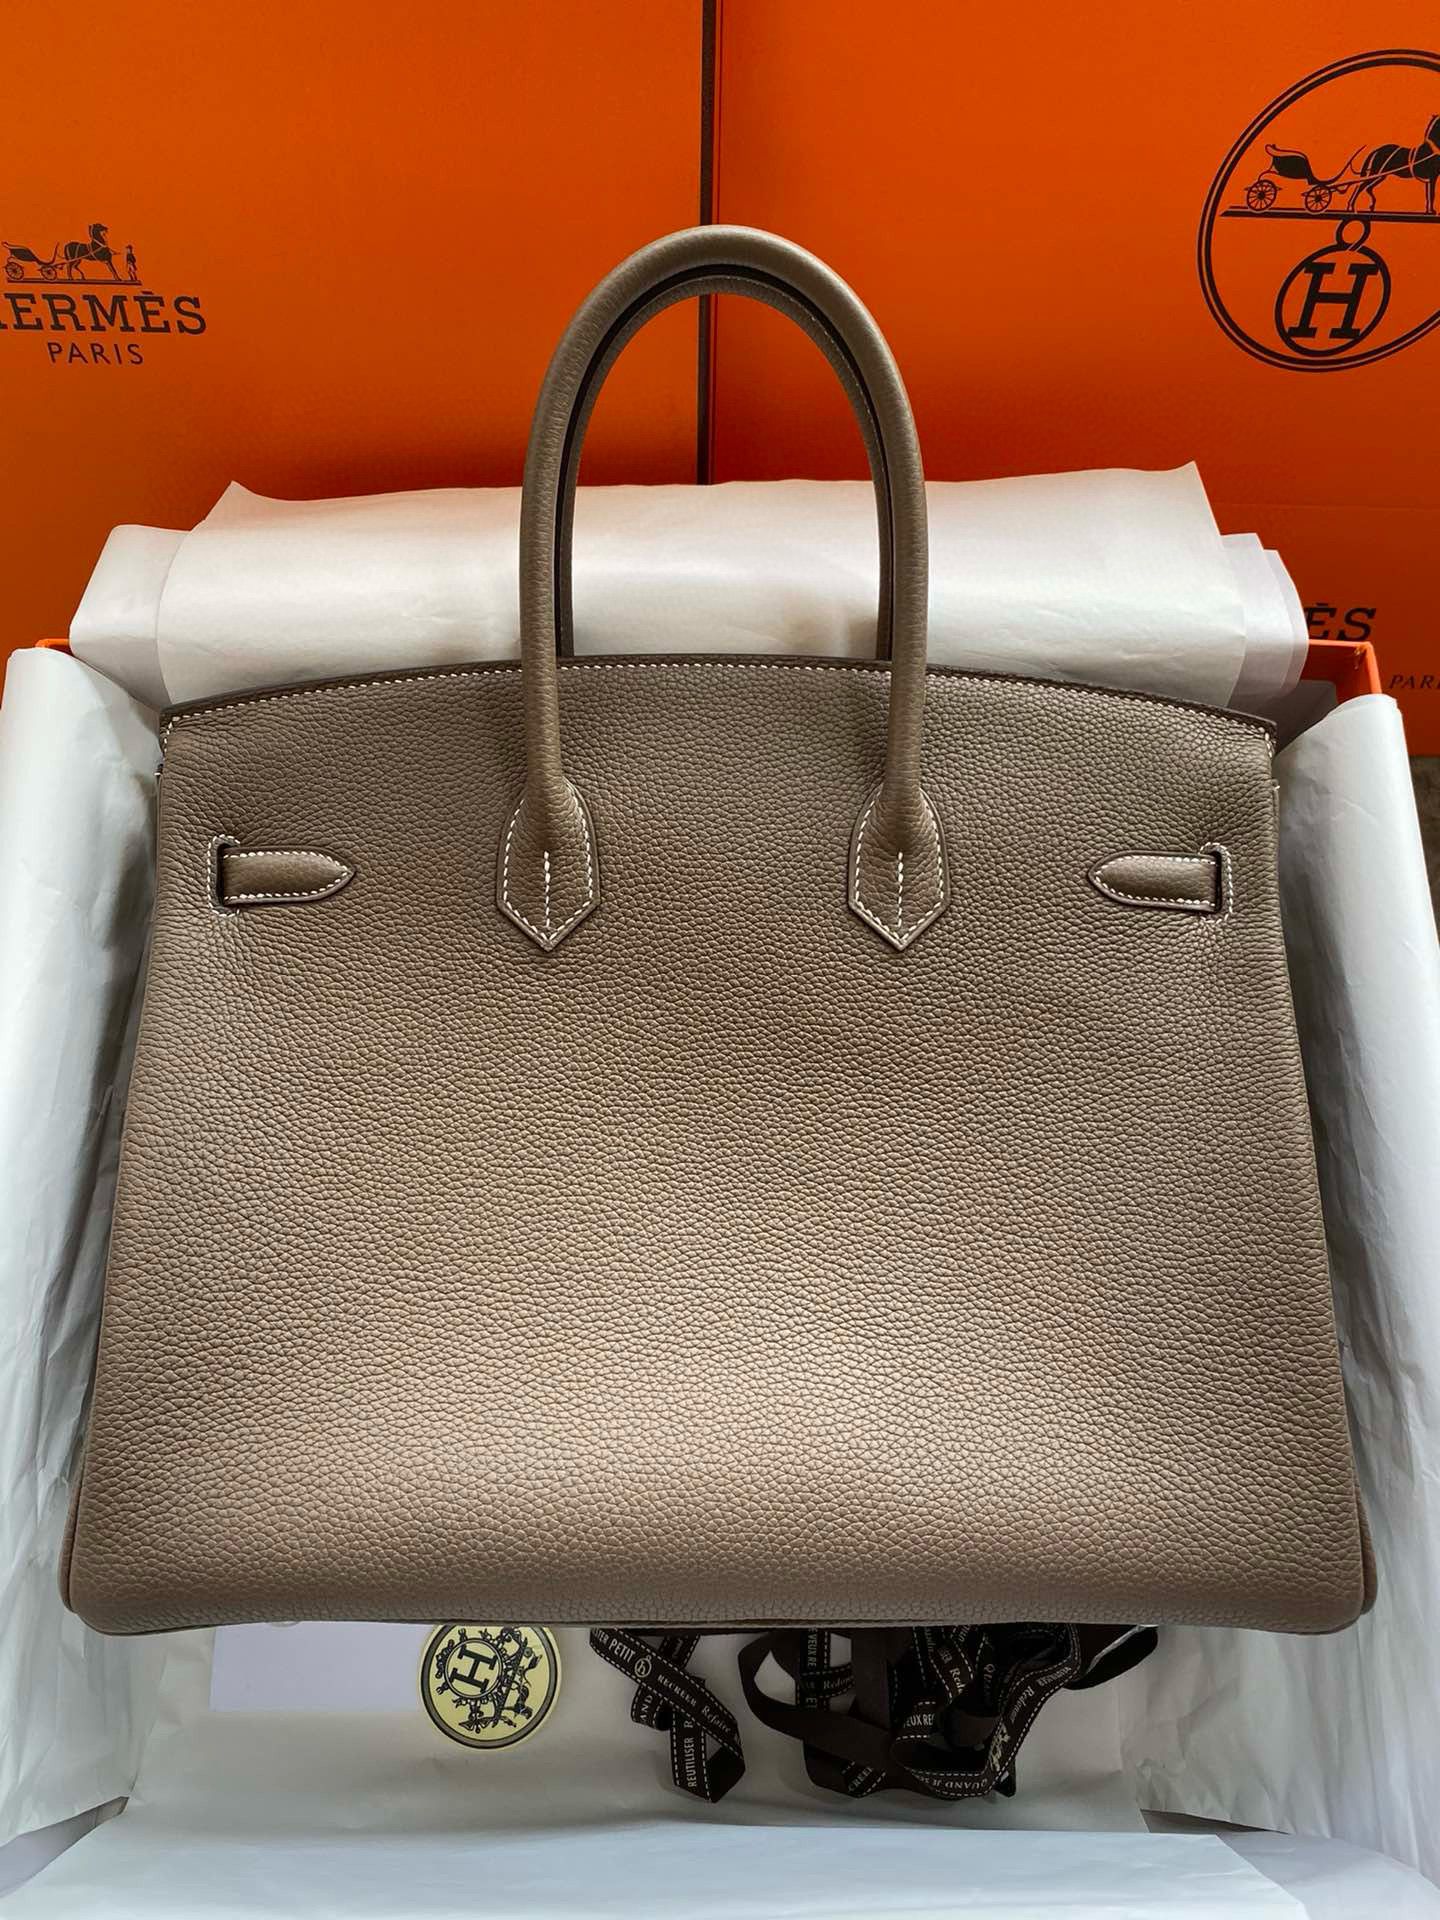 Hermes Birkin Tote Bag Original Togo Leather BK35 Elephant Gray